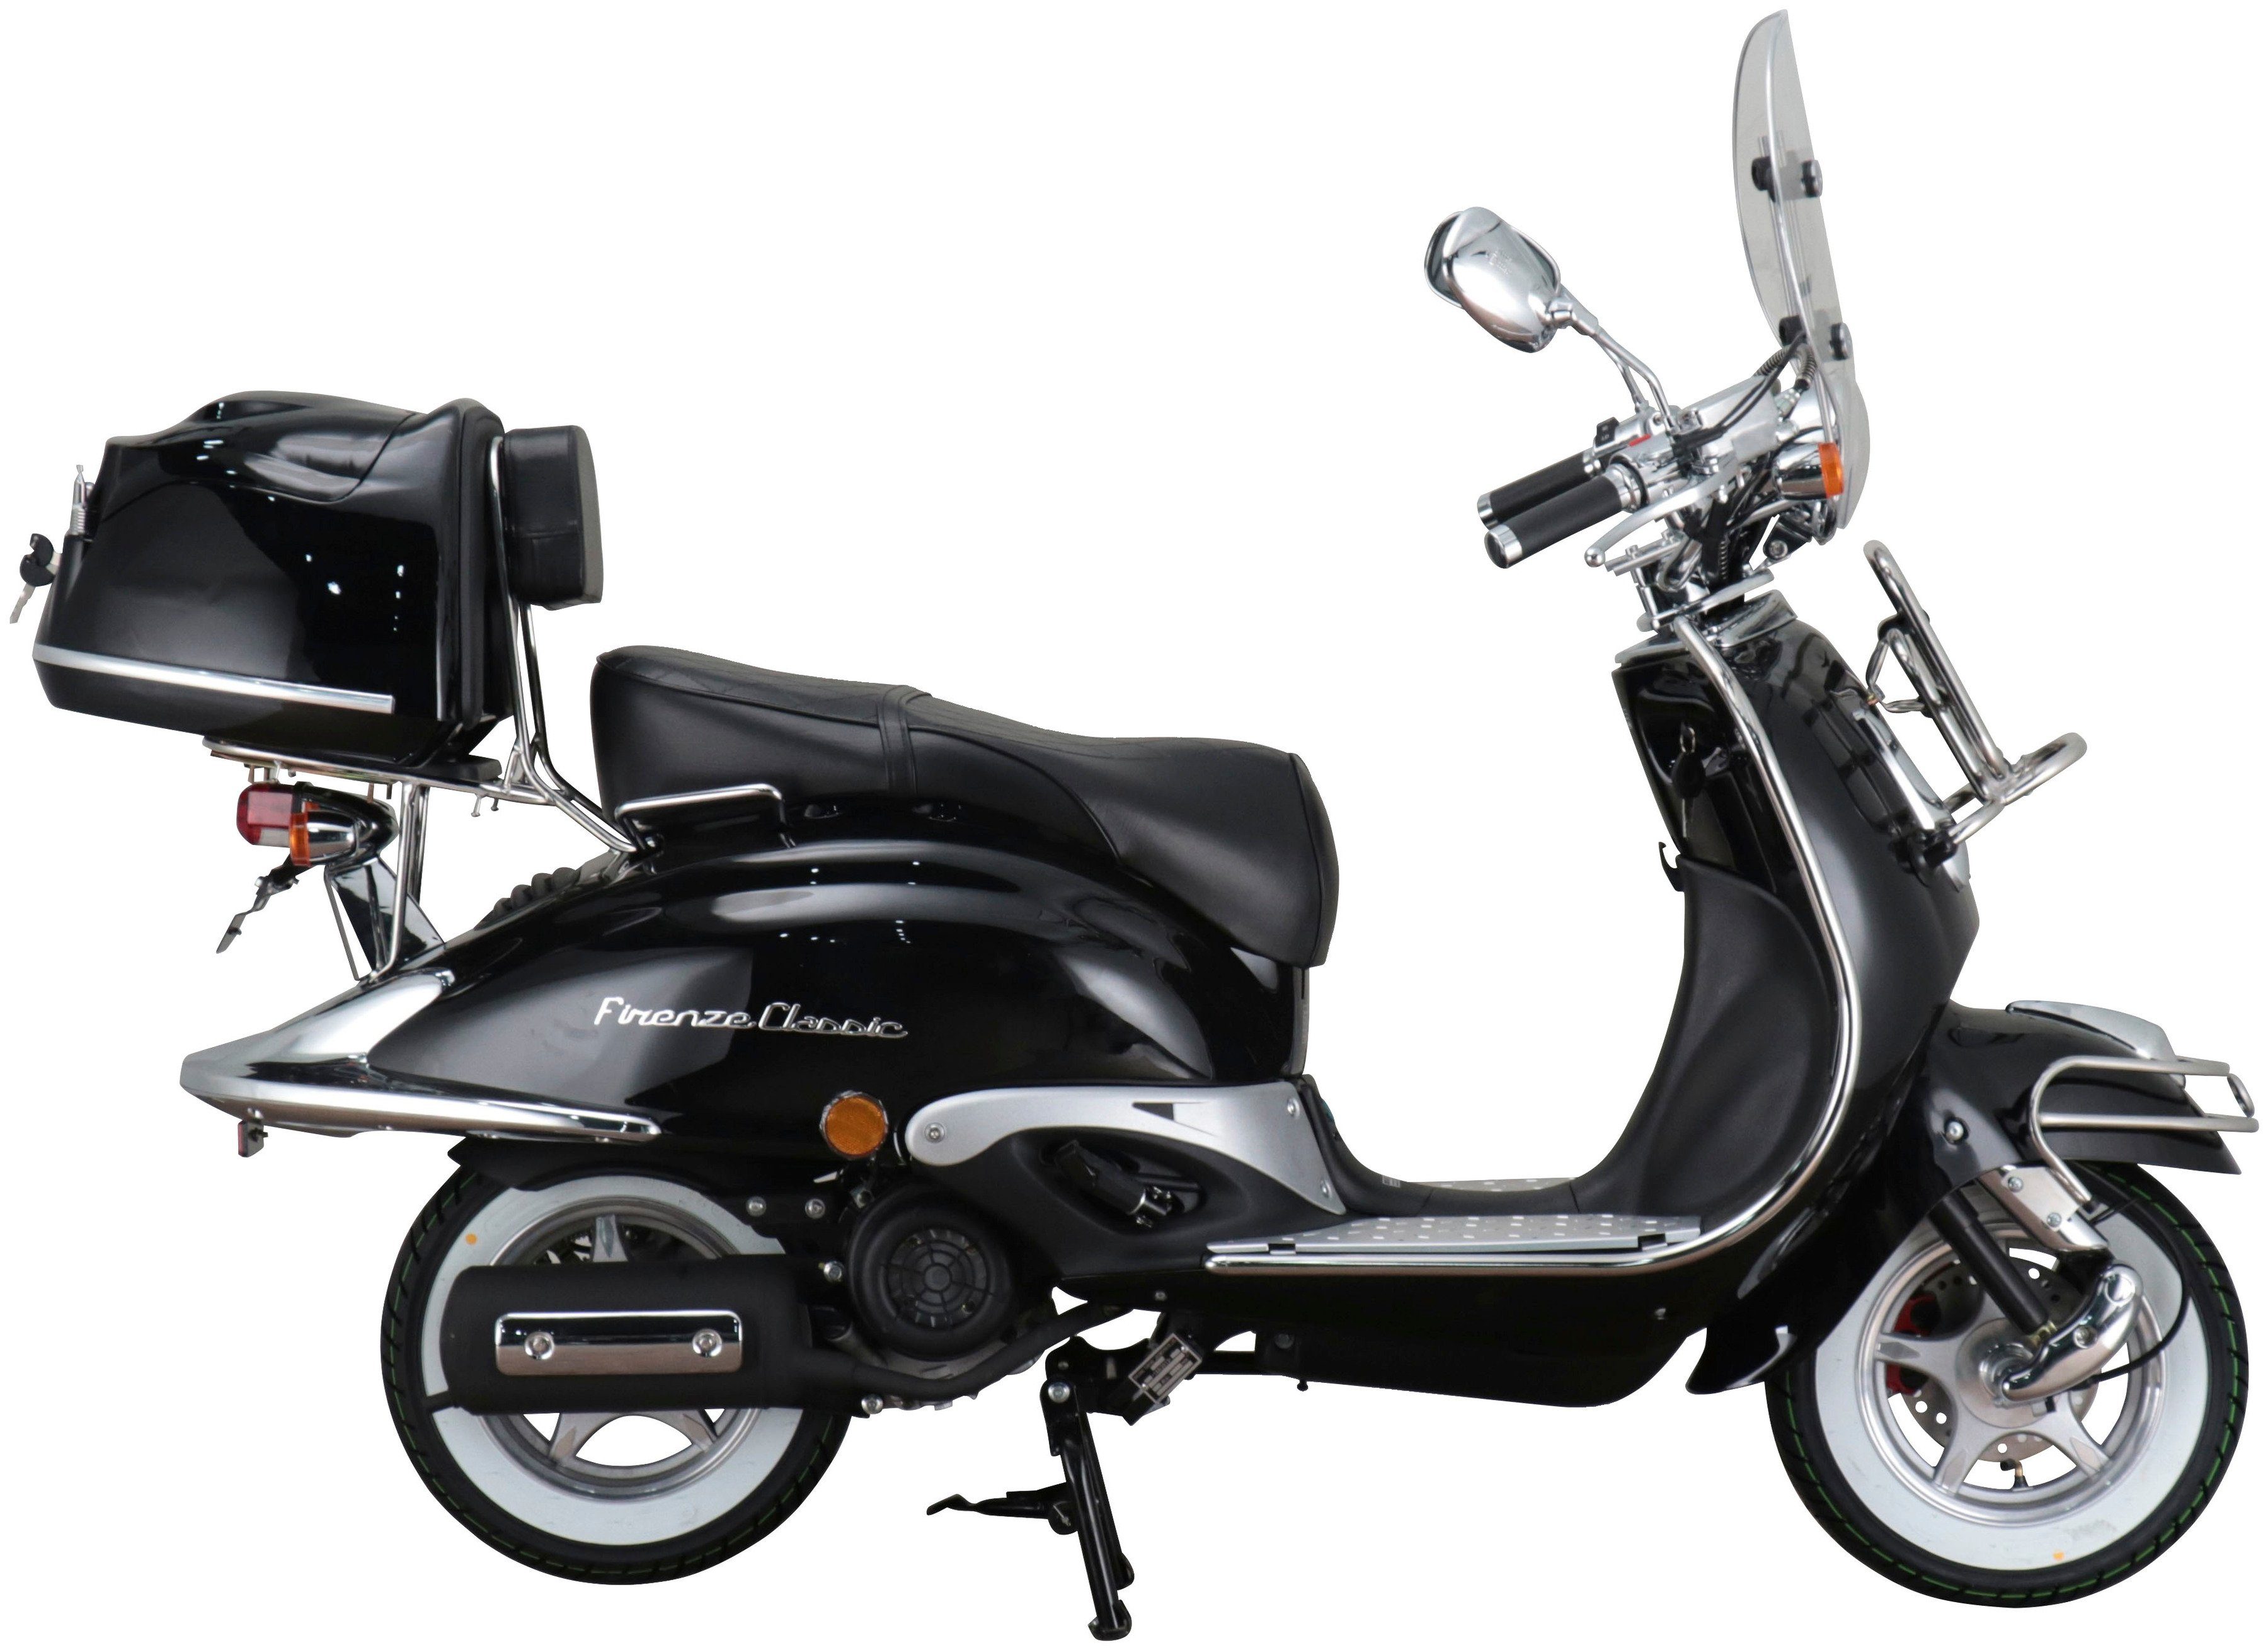 Alpha Motors Motorroller Retro ccm, (Komplett-Set) Euro 85 Firenze km/h, schwarz 5, Classic, 125